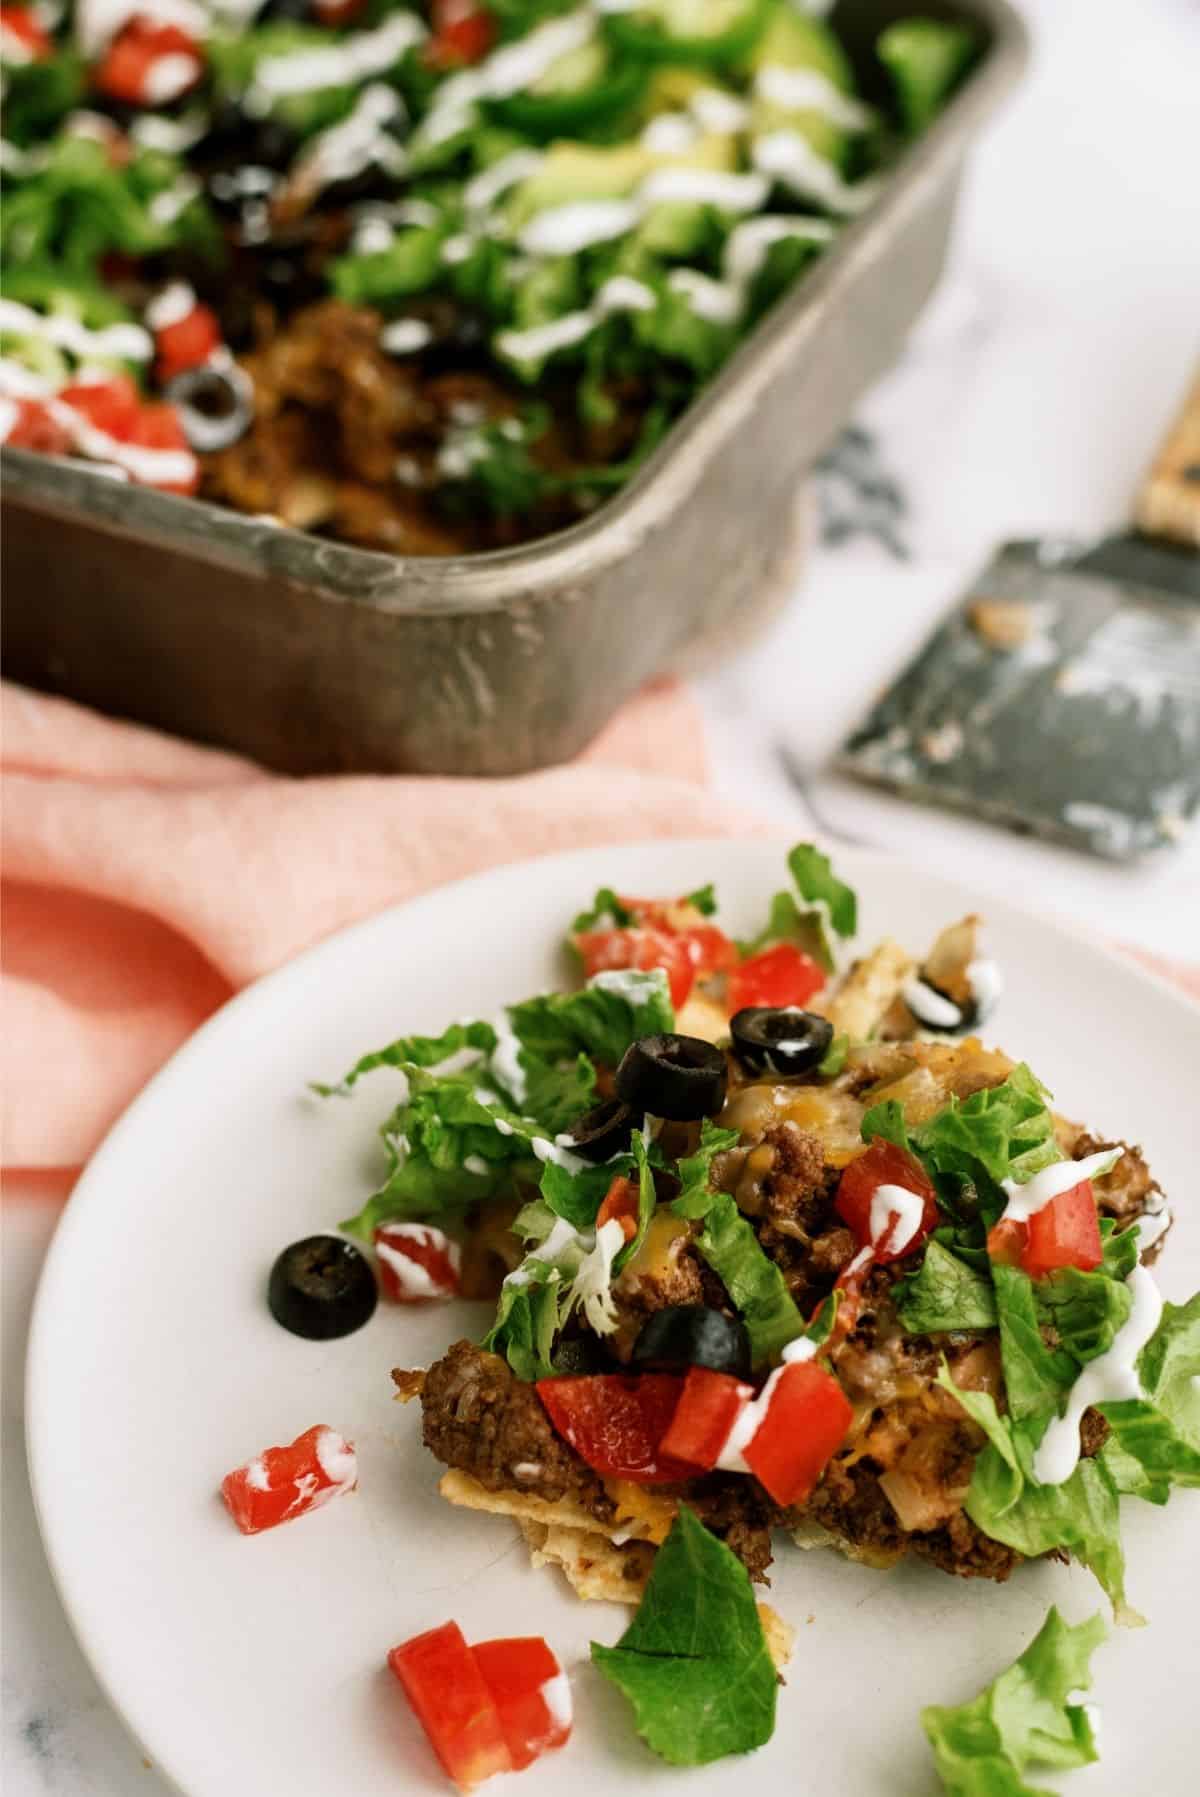 https://www.sixsistersstuff.com/wp-content/uploads/2021/04/20-Minute-Taco-Salad-Casserole-Recipe-1.jpg